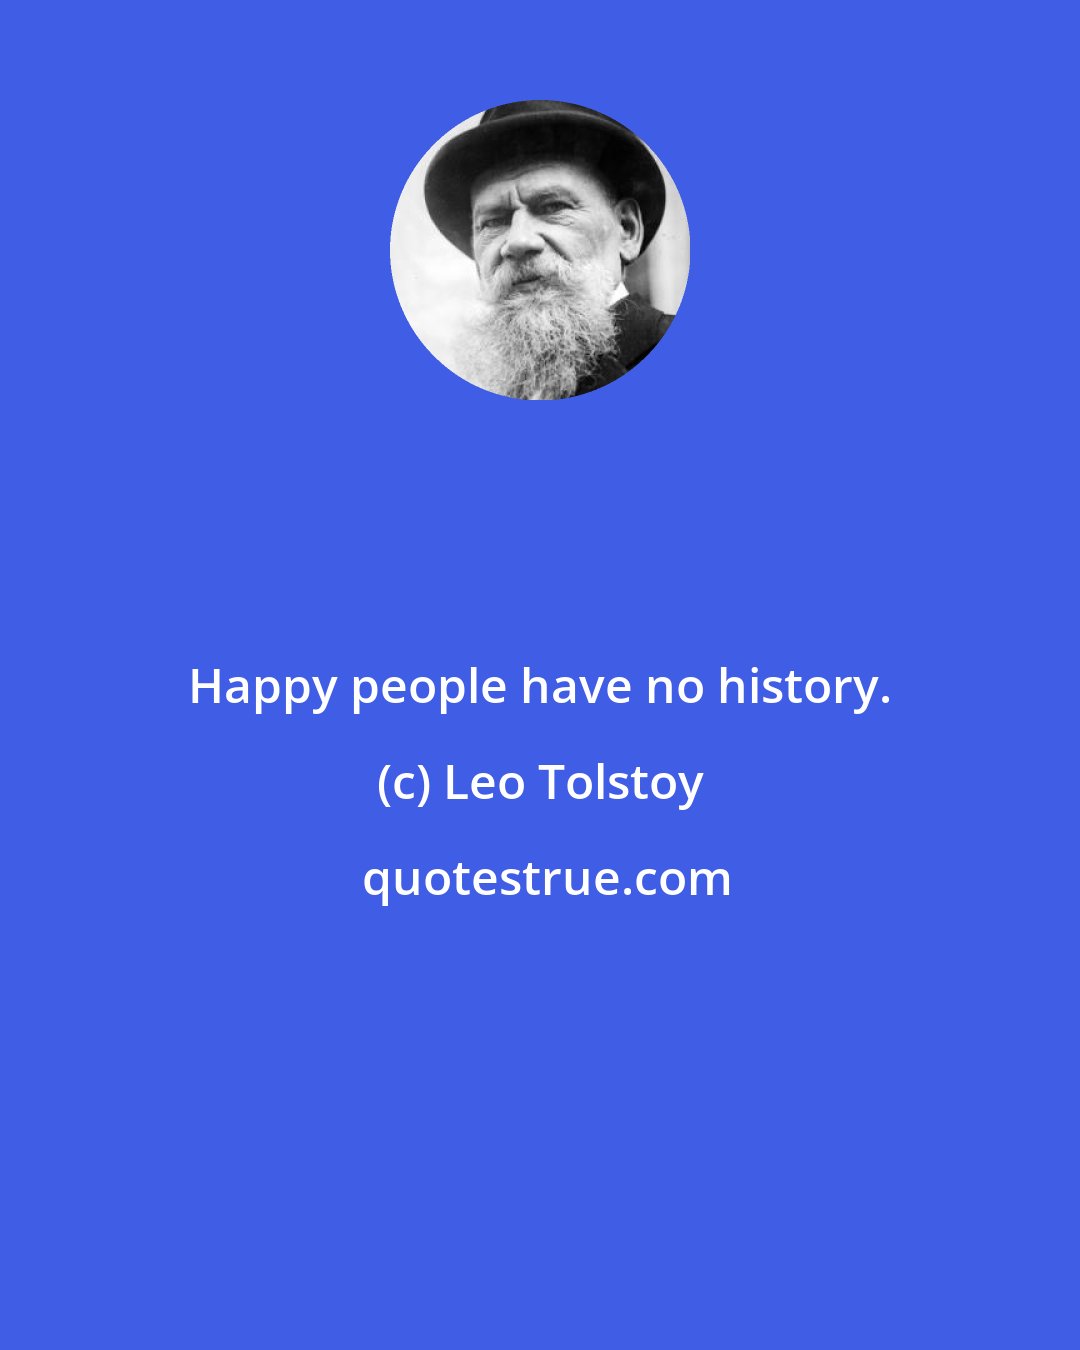 Leo Tolstoy: Happy people have no history.